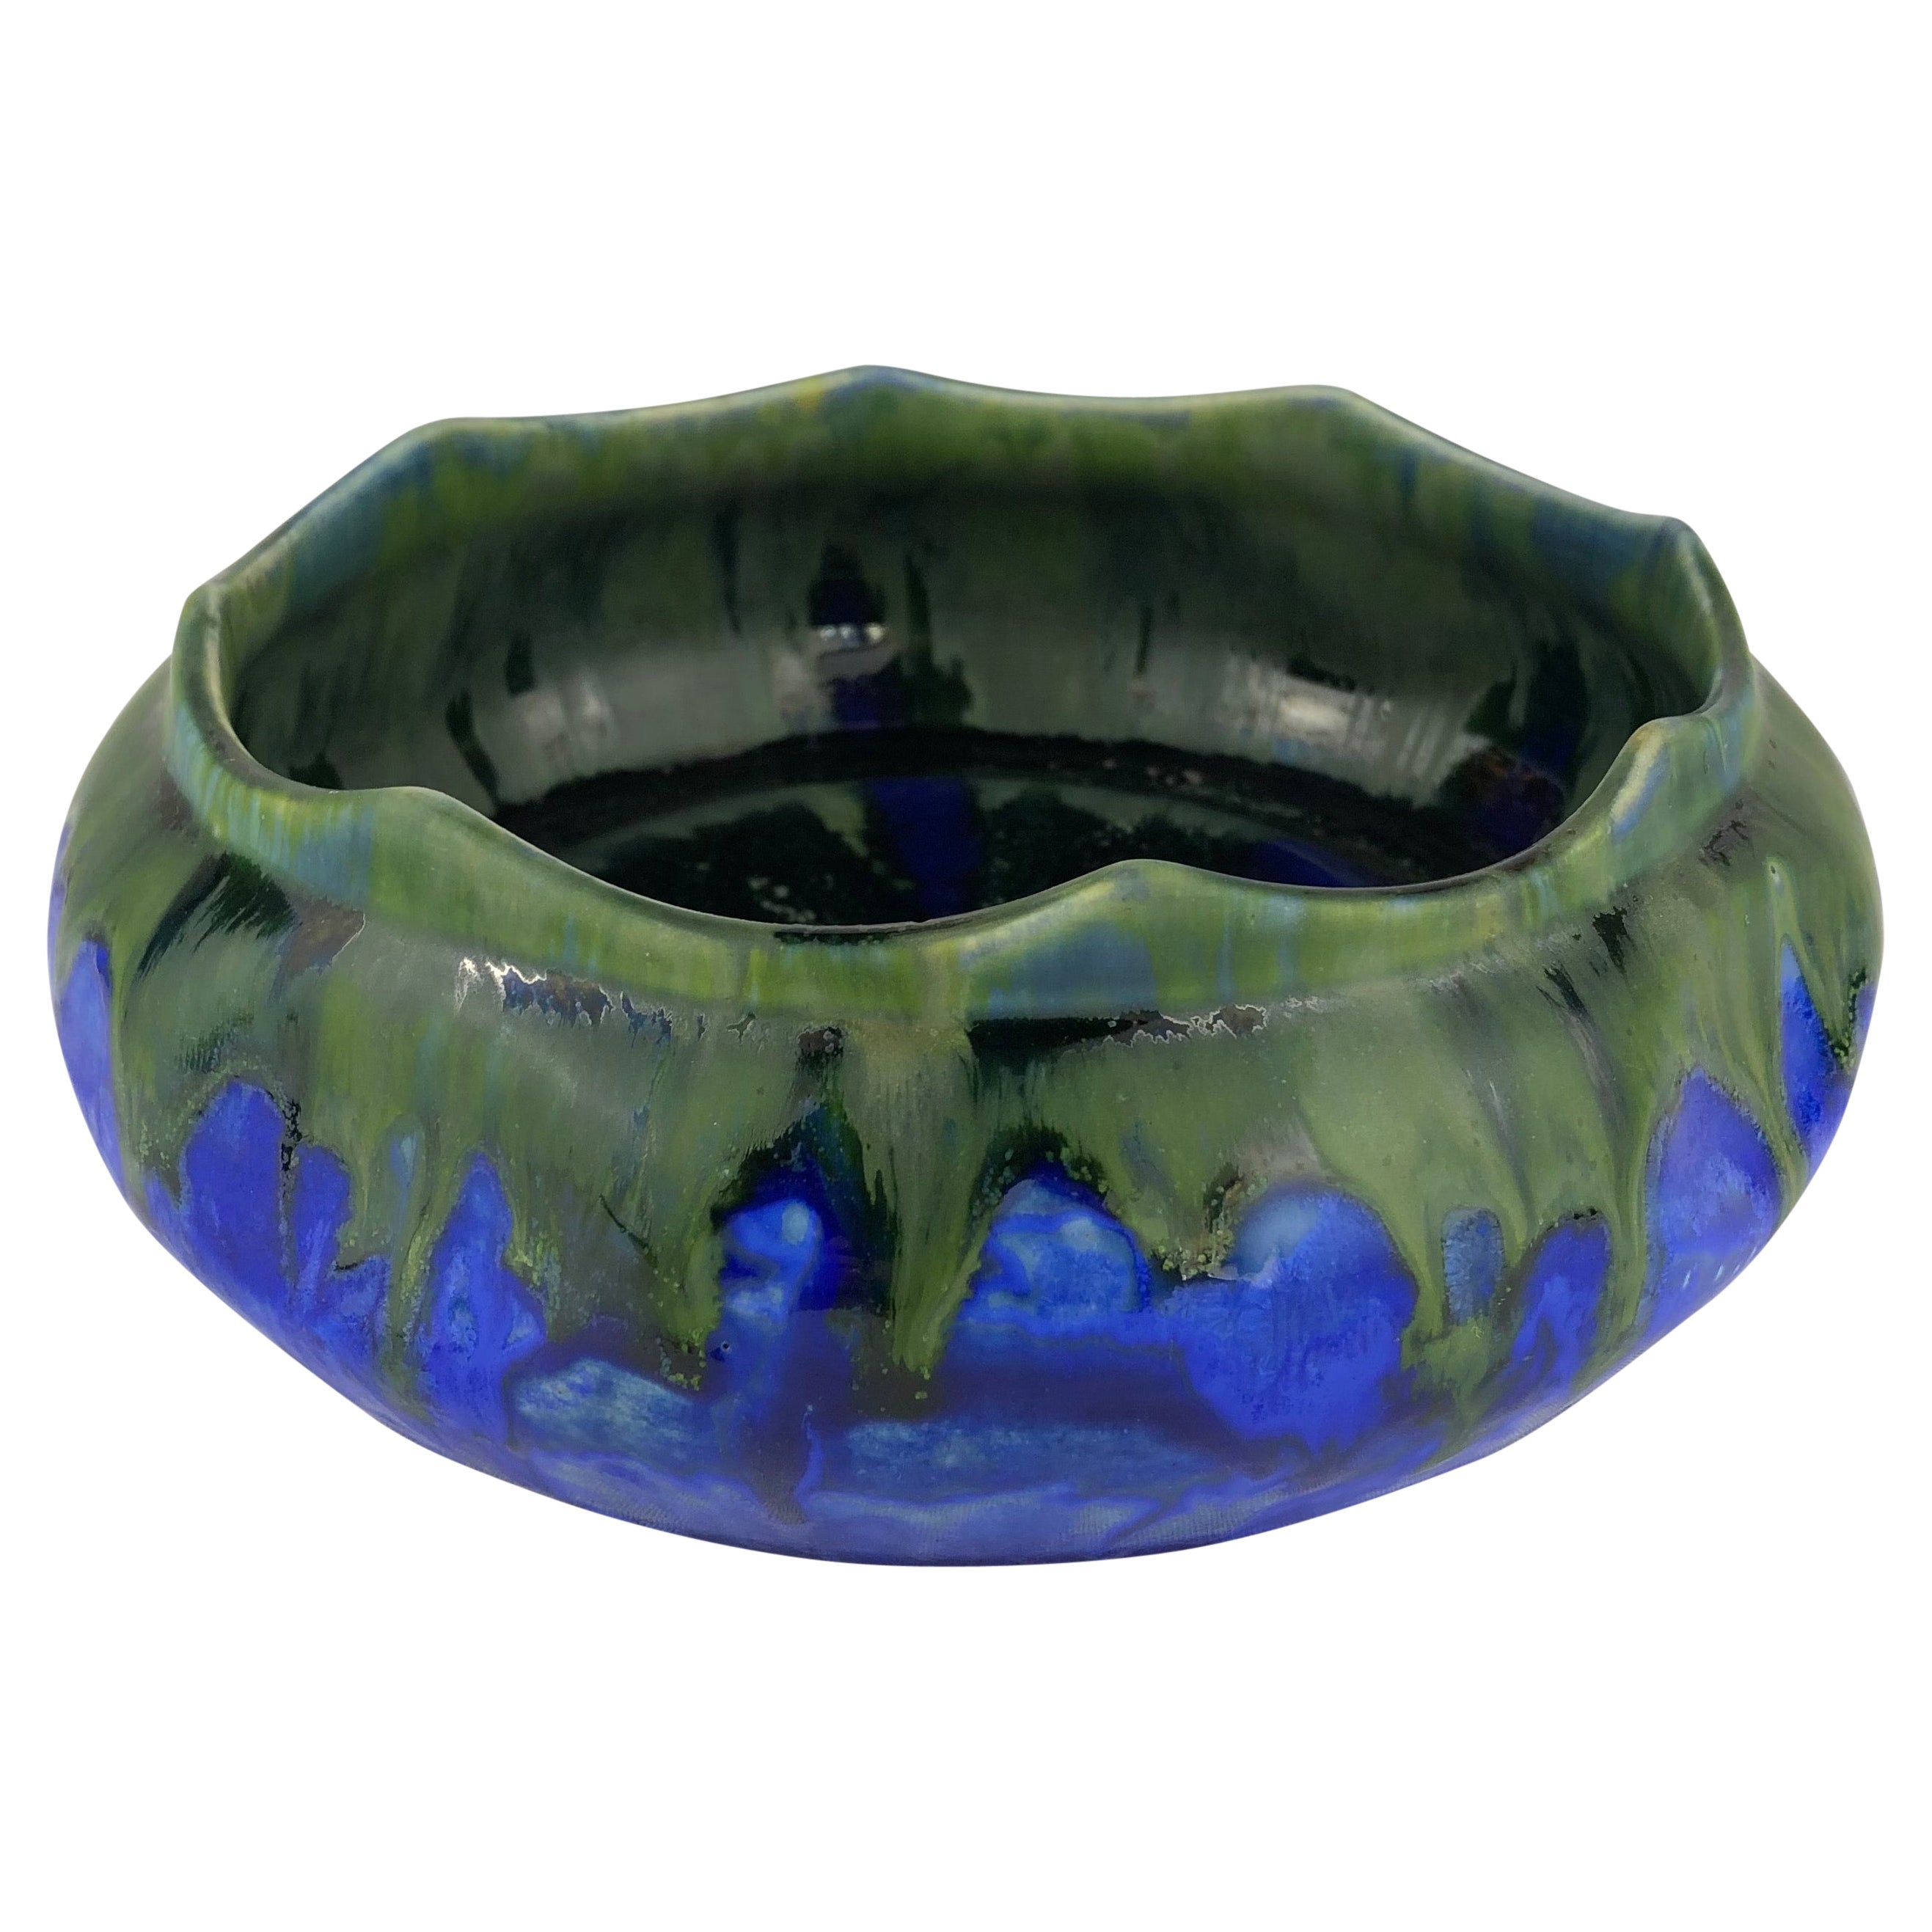 Stunning French Art Deco Ceramic Bowl by Gilbert Menetier, Signed